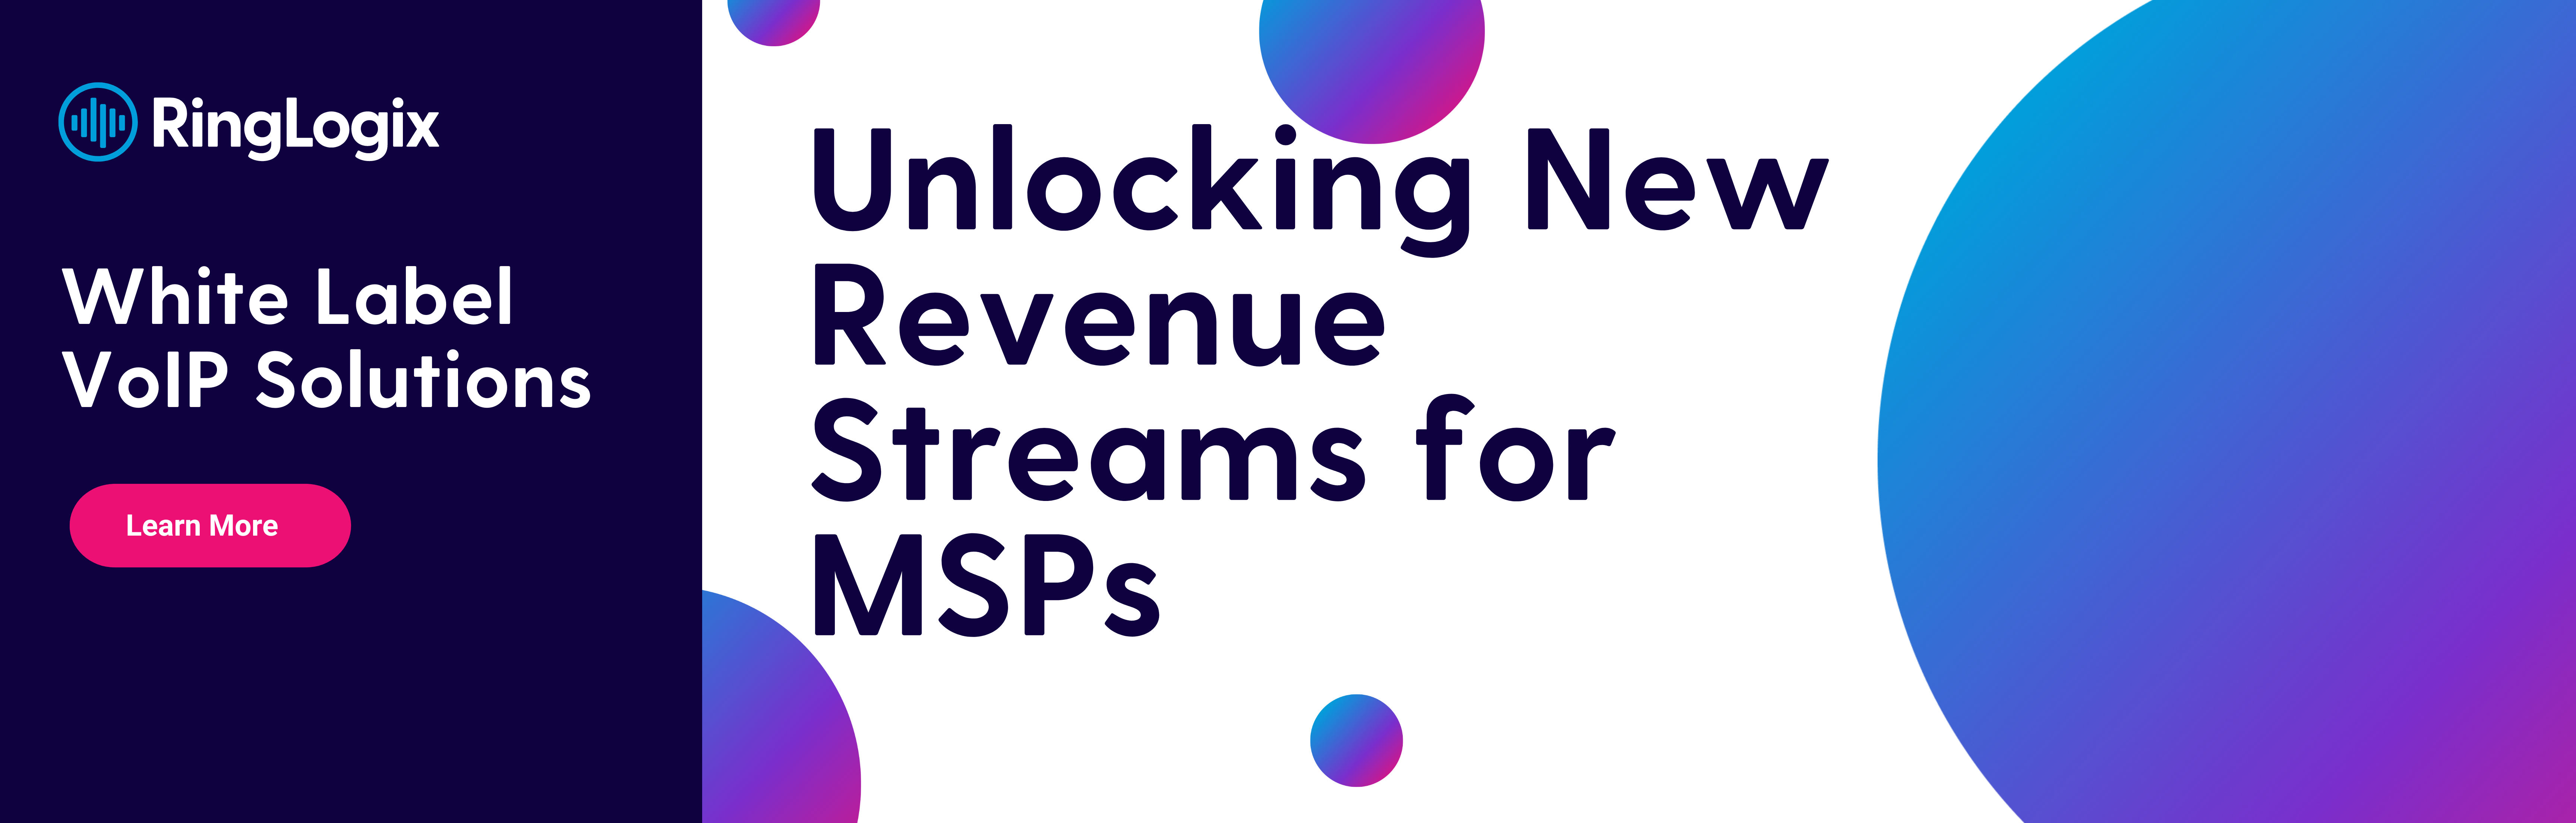 Unlocking New Revenue Streams for MSPs